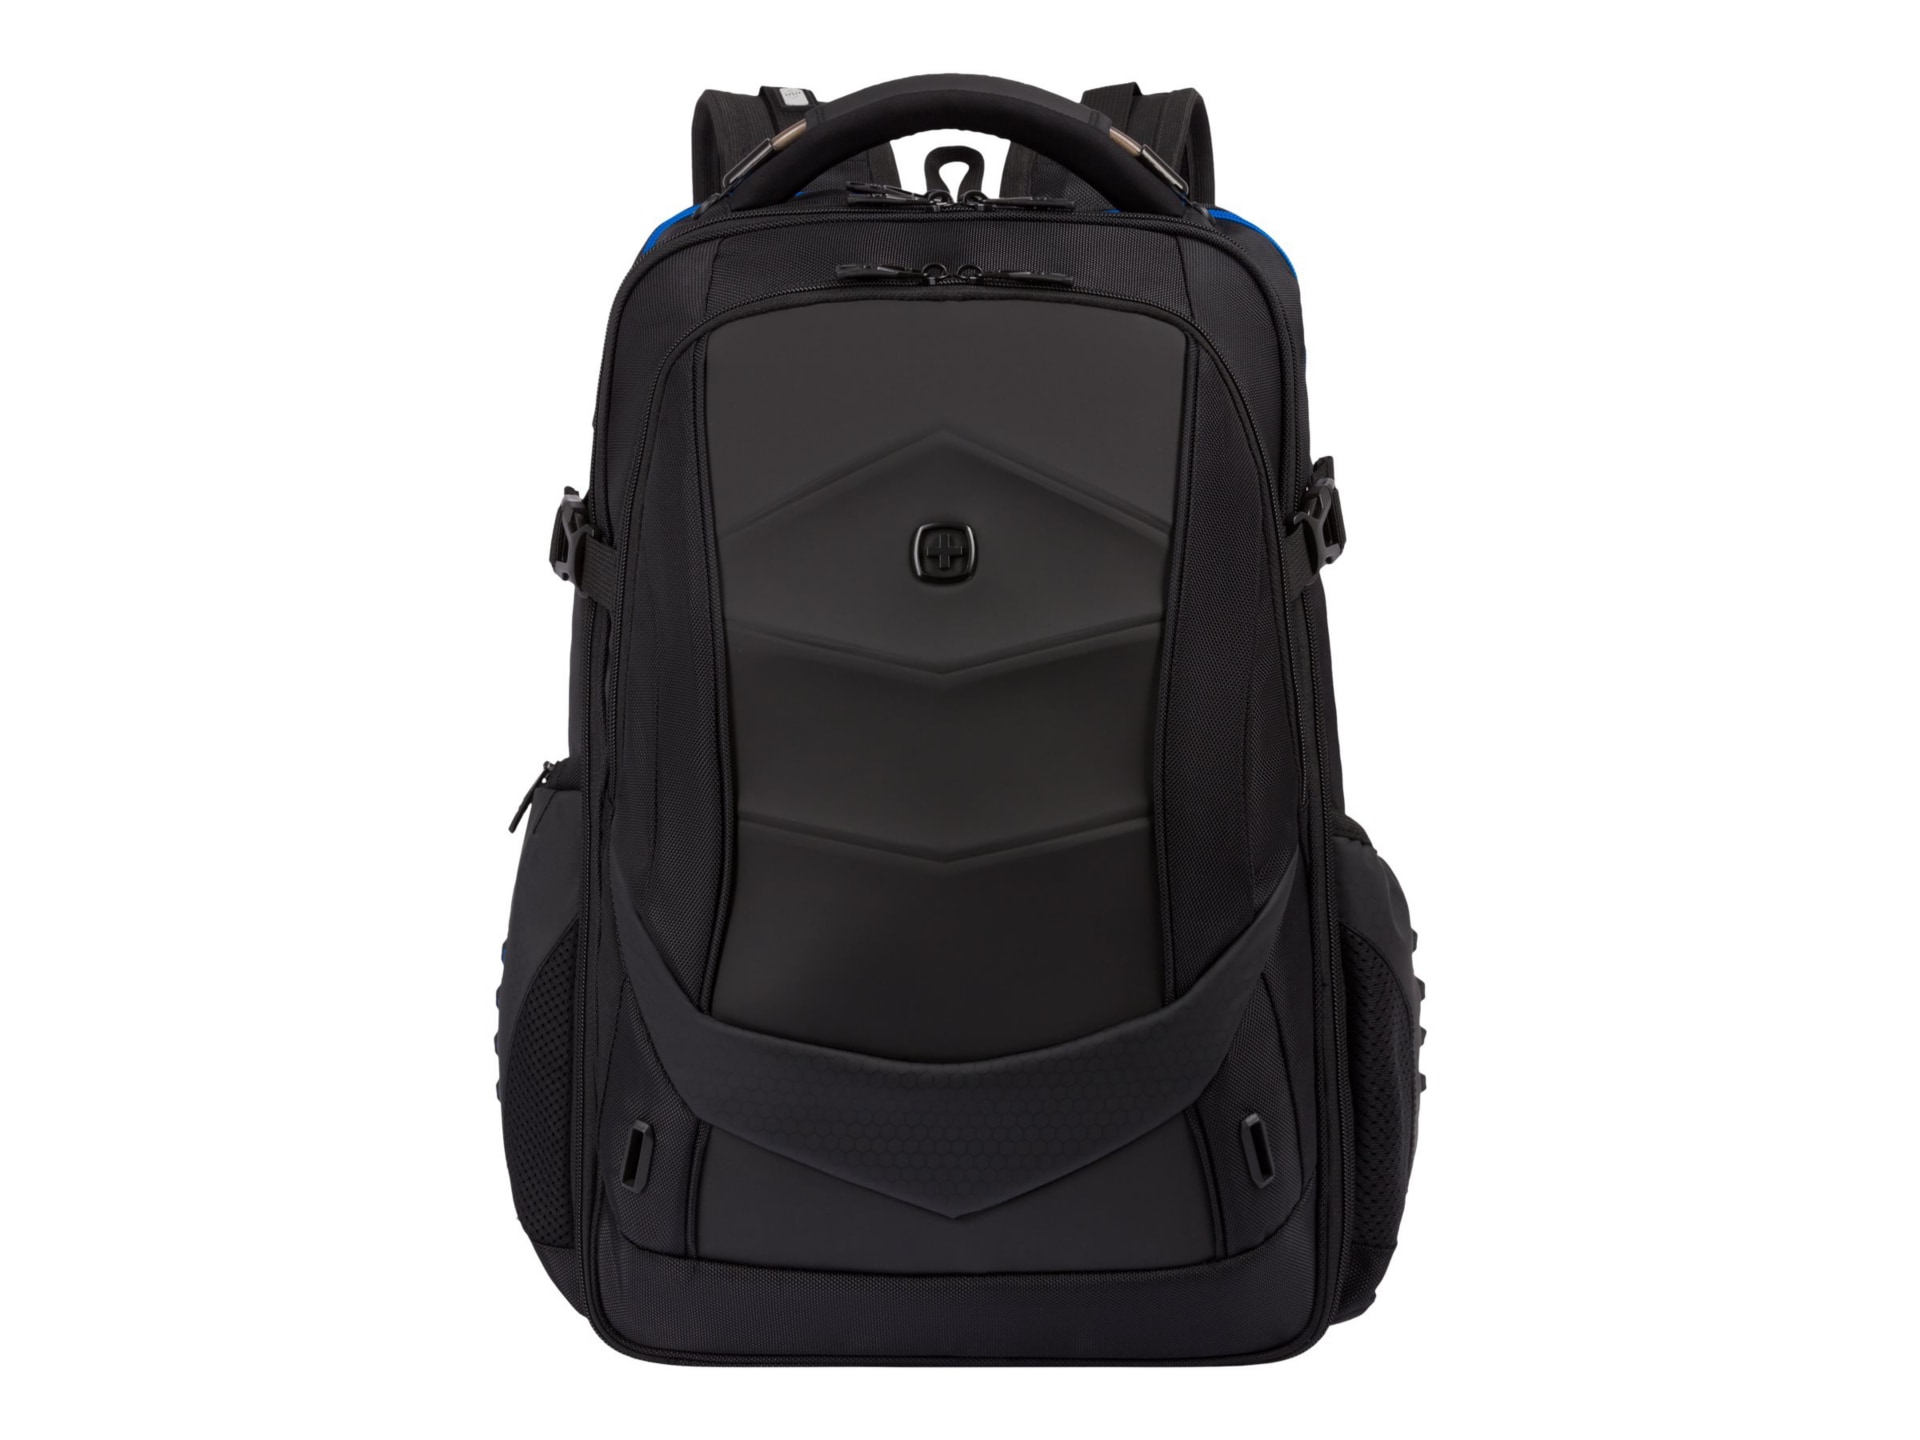 Wenger Swissgear 8120 USB Gaming Laptop Backpack - Black